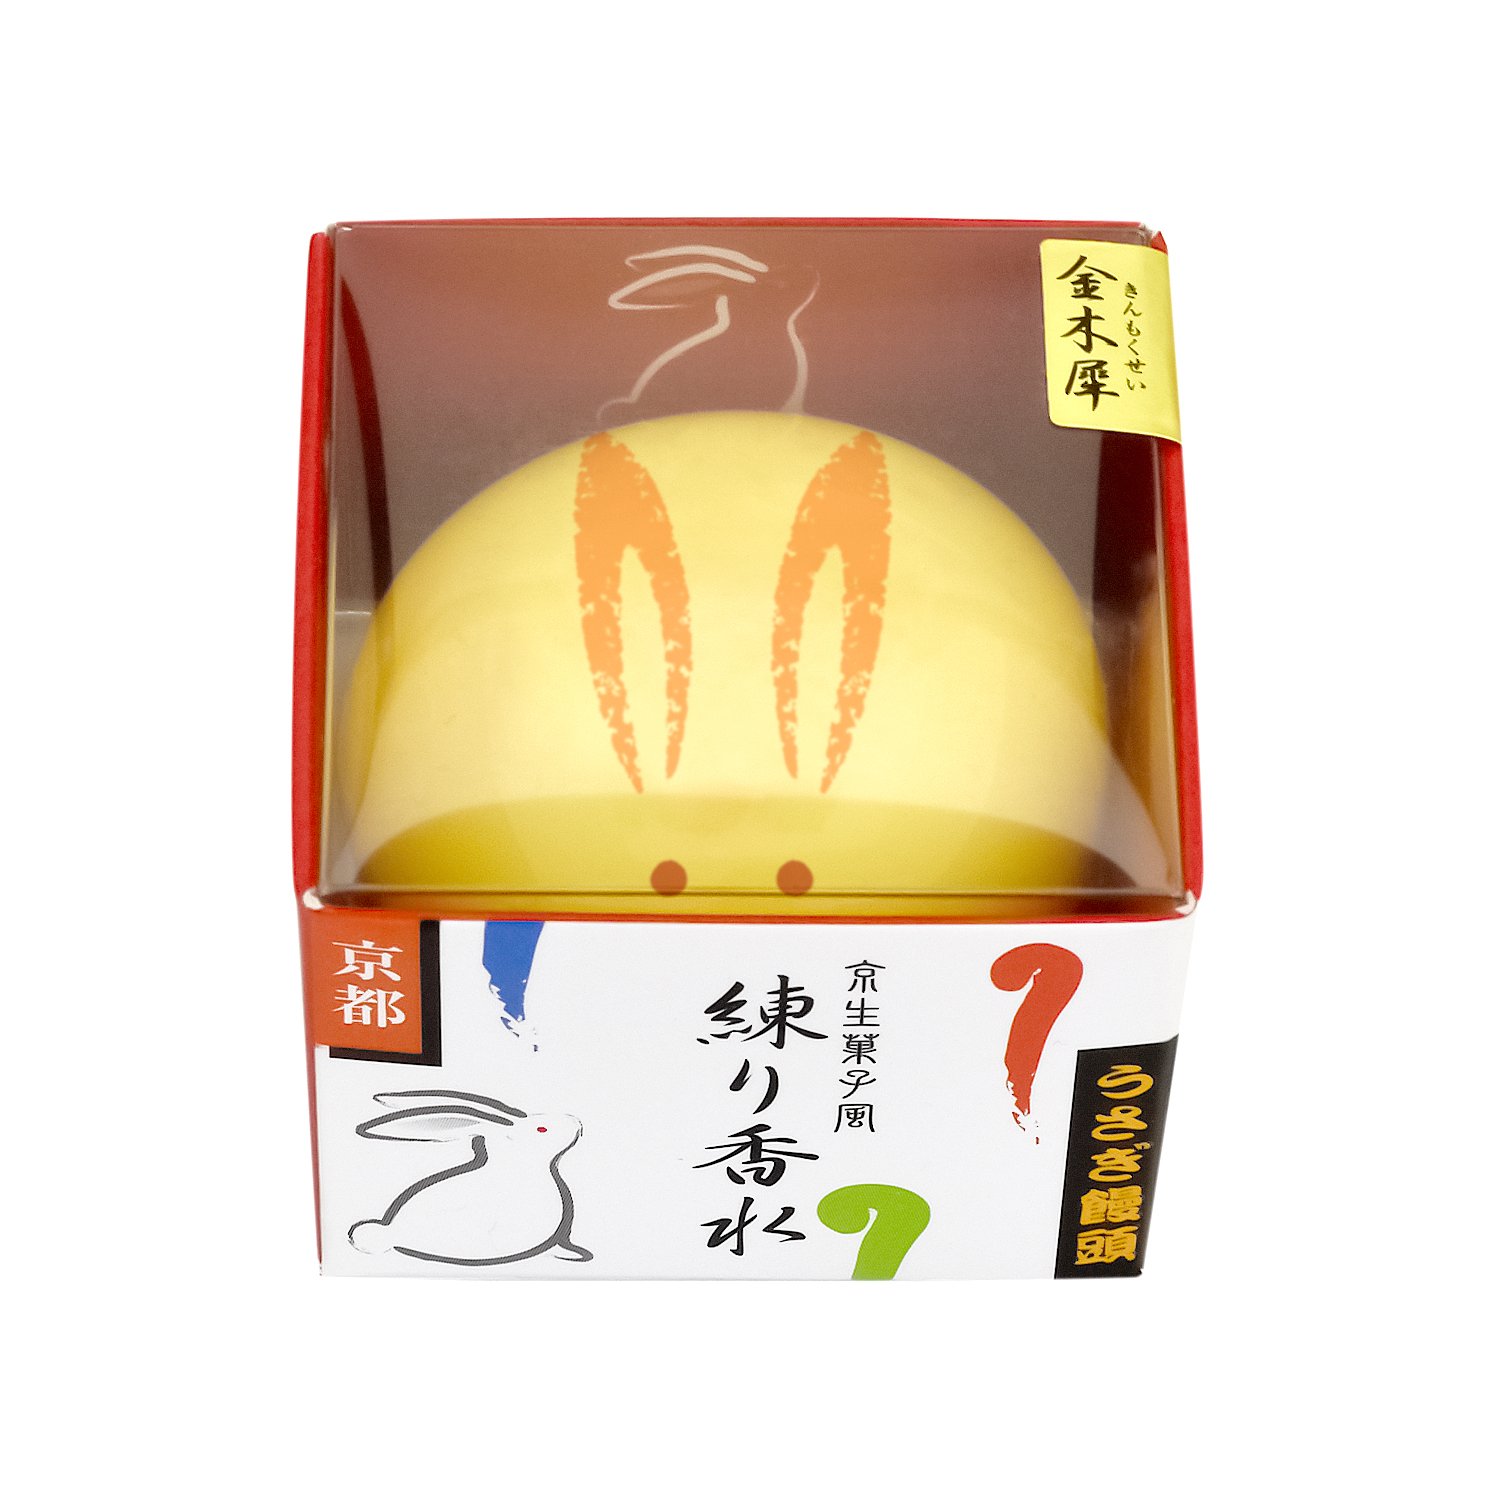 Bunny Solid Perfume (Fragrant Olive) Usagi Manju : Kyoto Bath & Body !! 1 piece